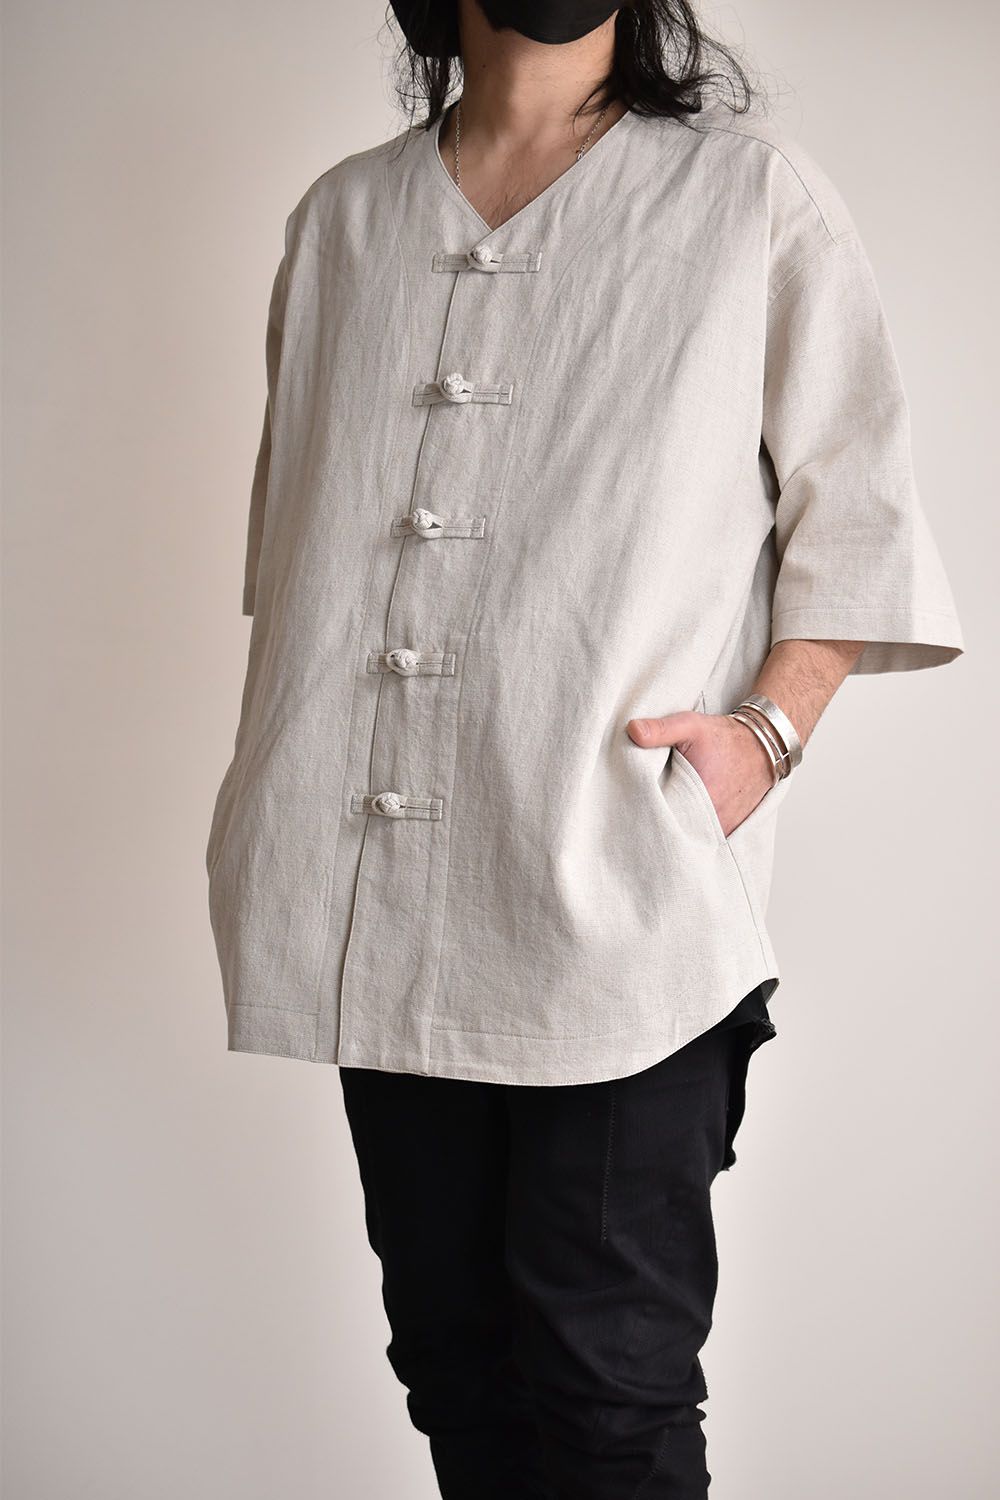 Cotton Linen Short Sleeve Shirts"White"/コットンリネンショートスリーブシャツ"ホワイト"